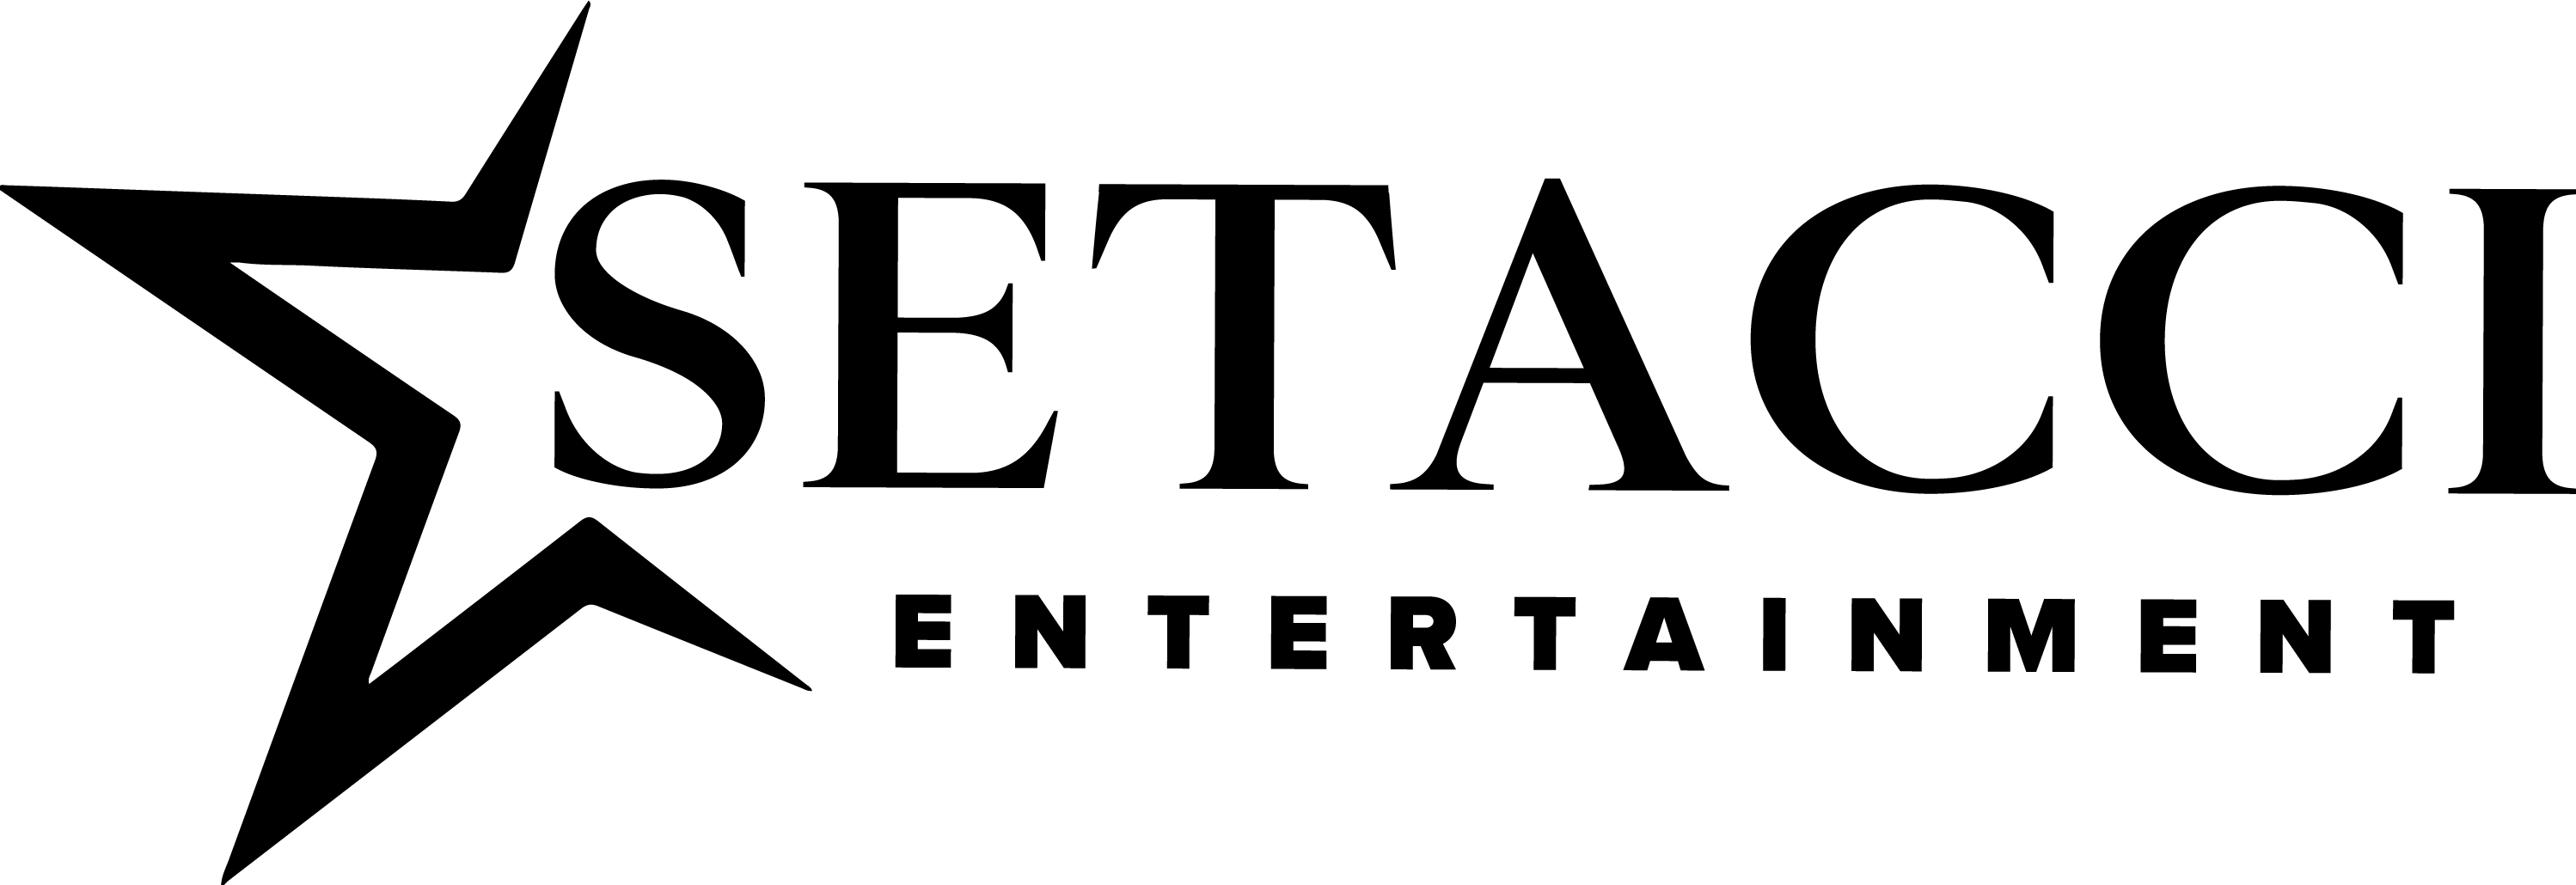 Setacci Entertainment